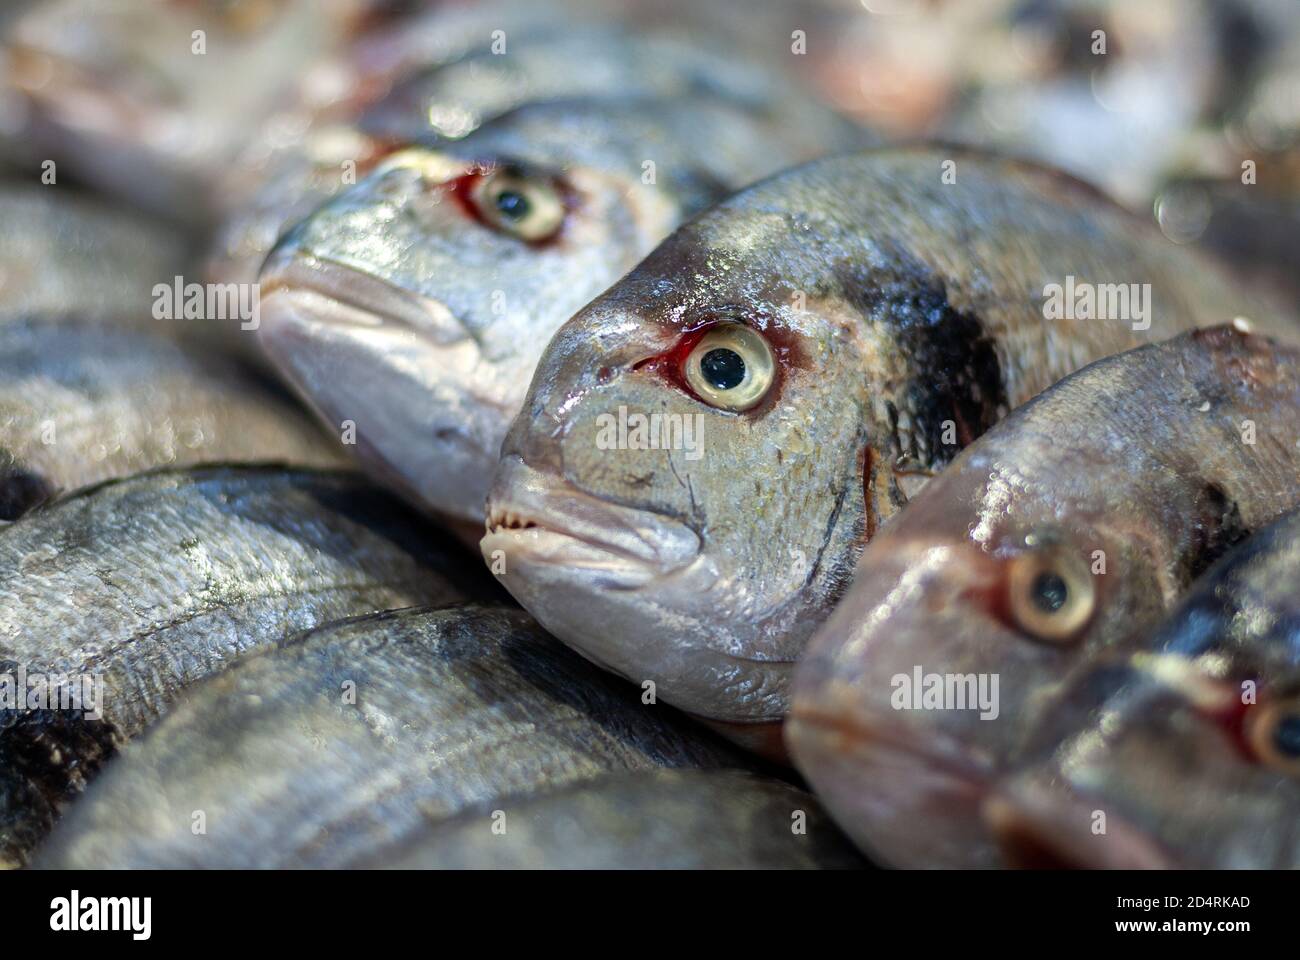 Raw dorado fish (gilthead bream, Sparus auratus) at fish market, close up Stock Photo